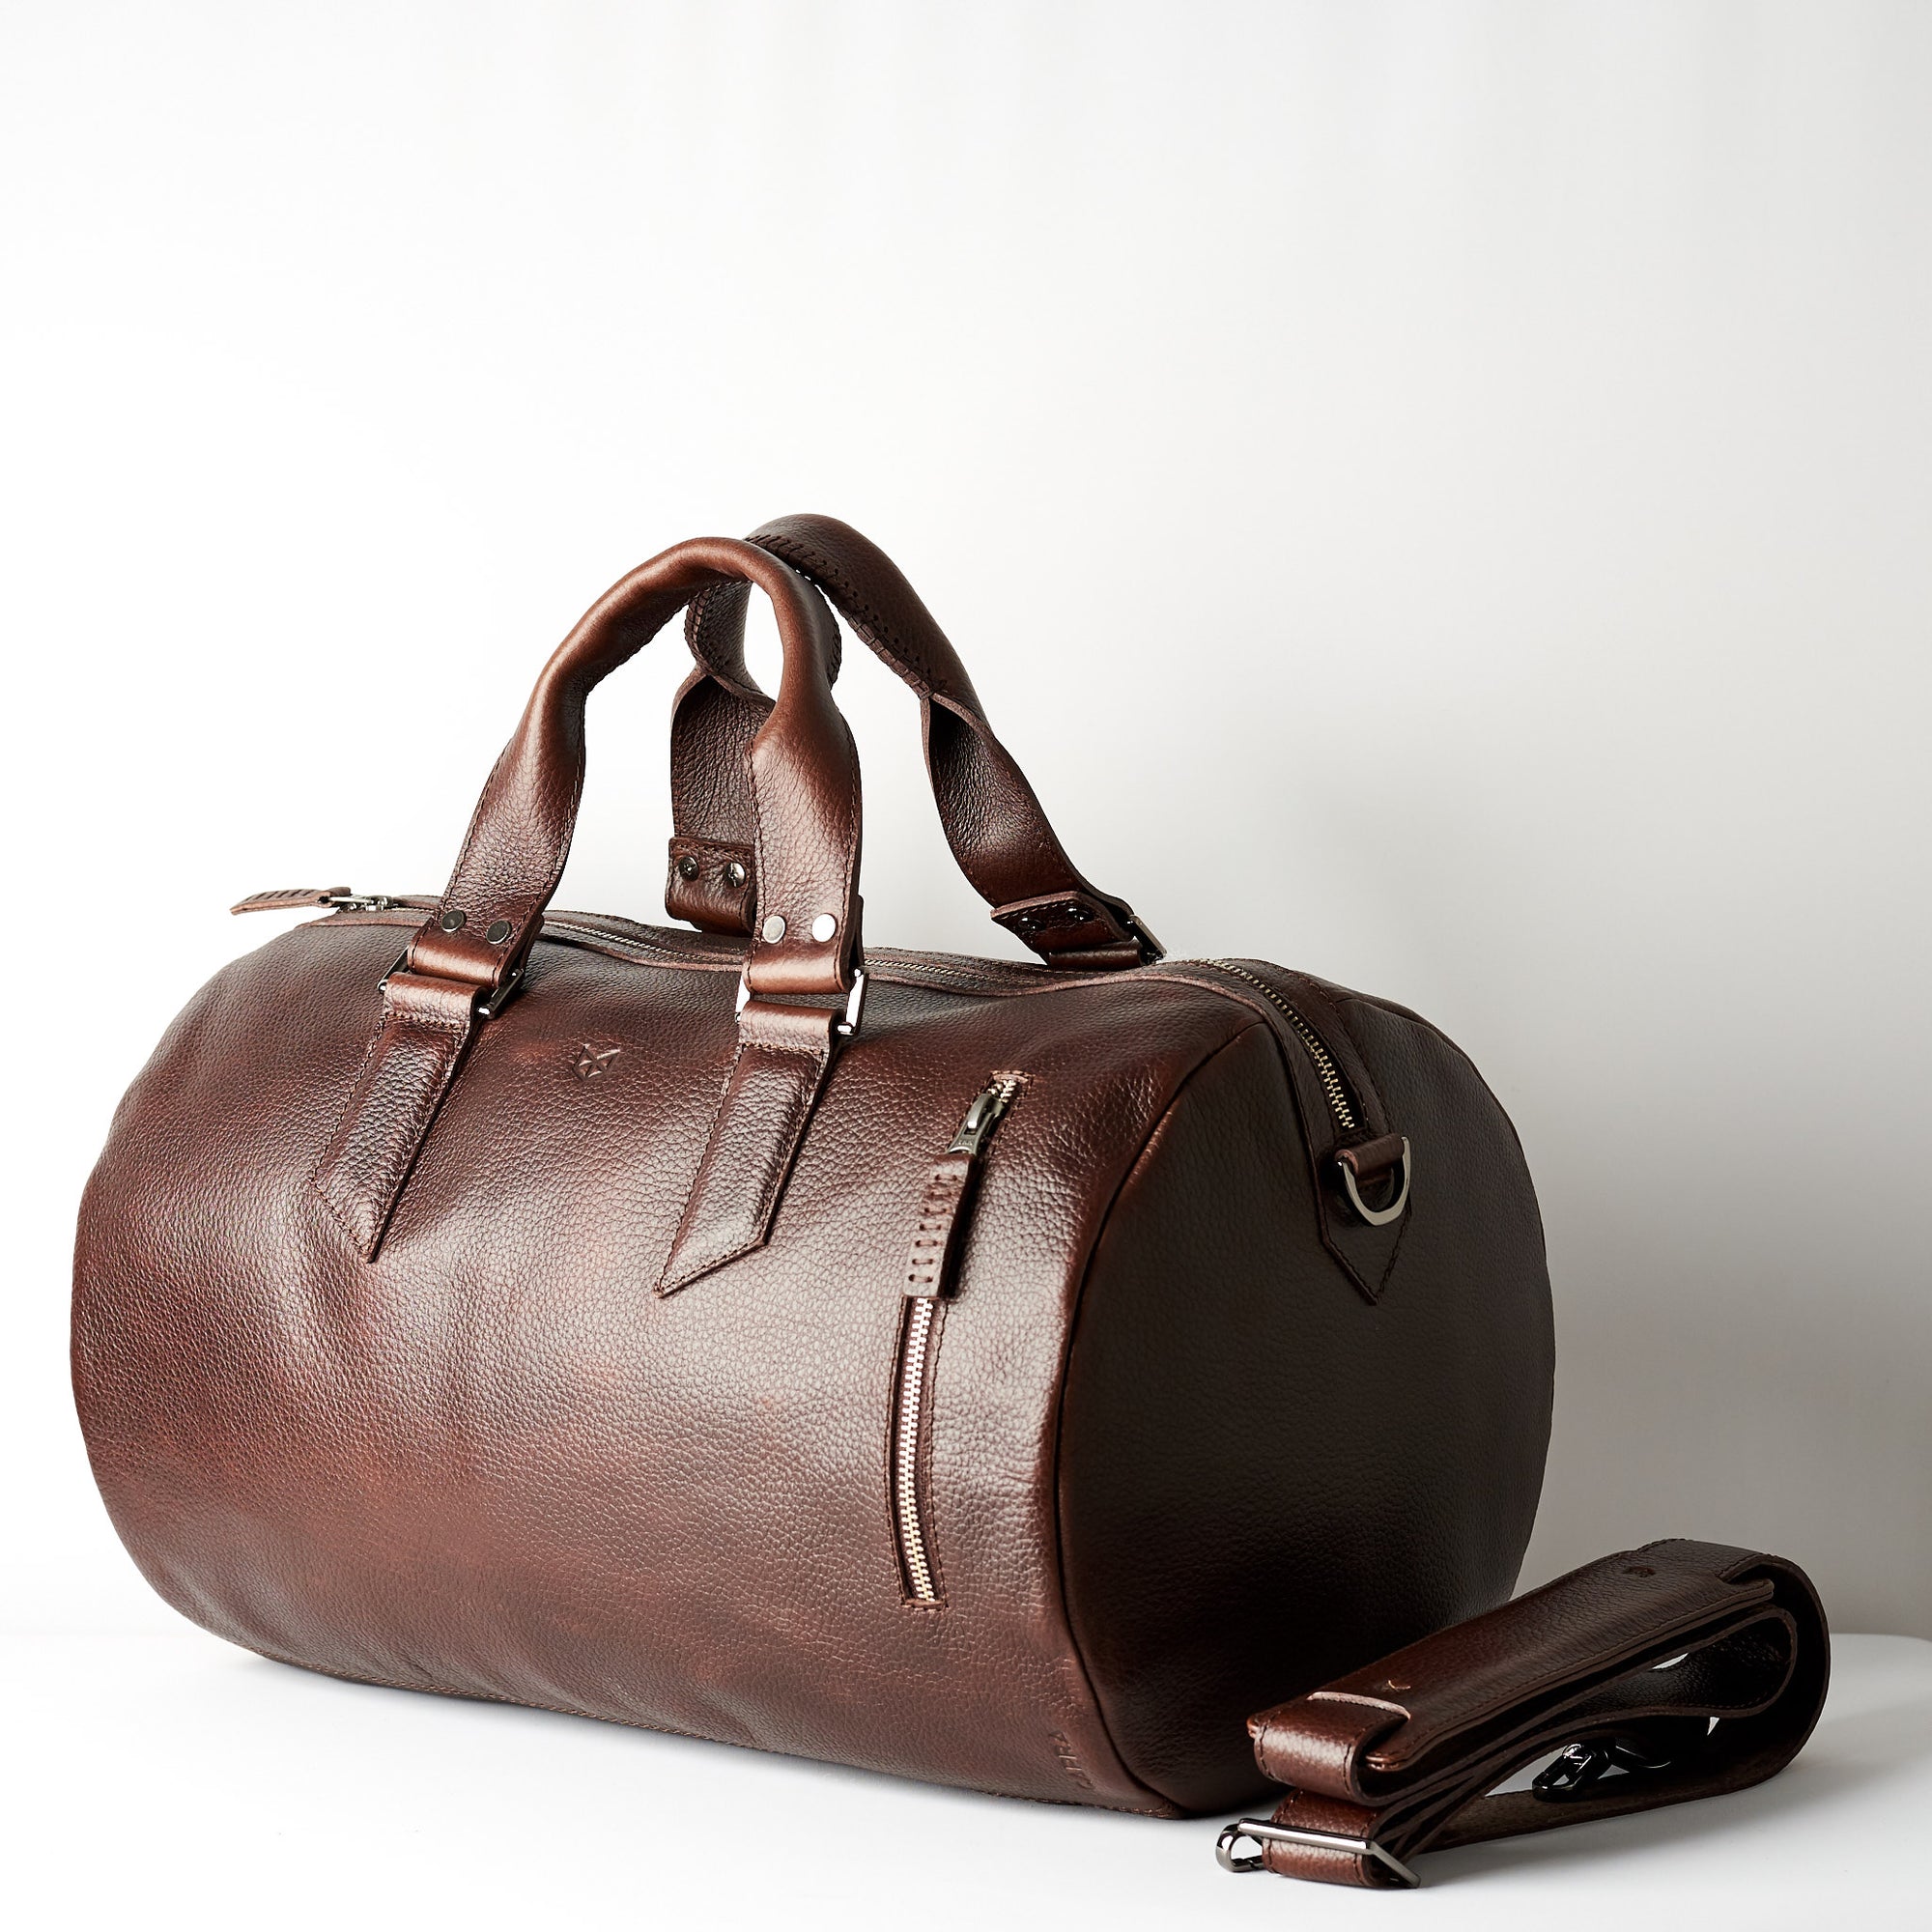 Style. Duffle with padded shoulder strap. Dark brown leather carryall bag. Mens travel weekender bag